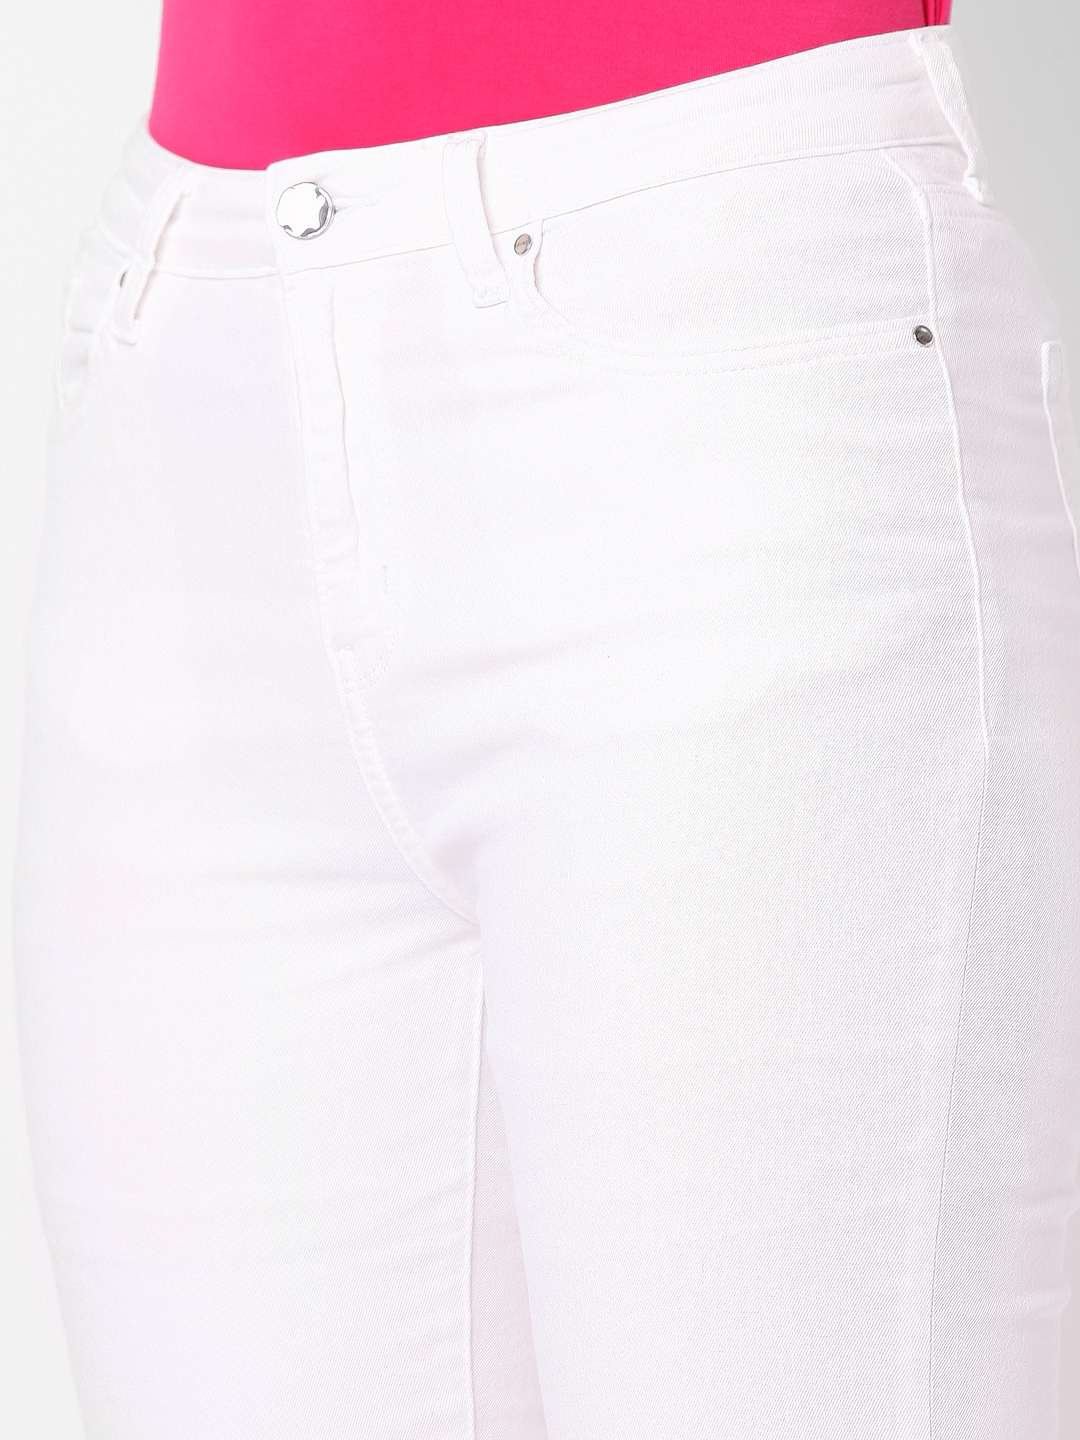 spykar | Women's White Cotton Solid Slim Jeans 5